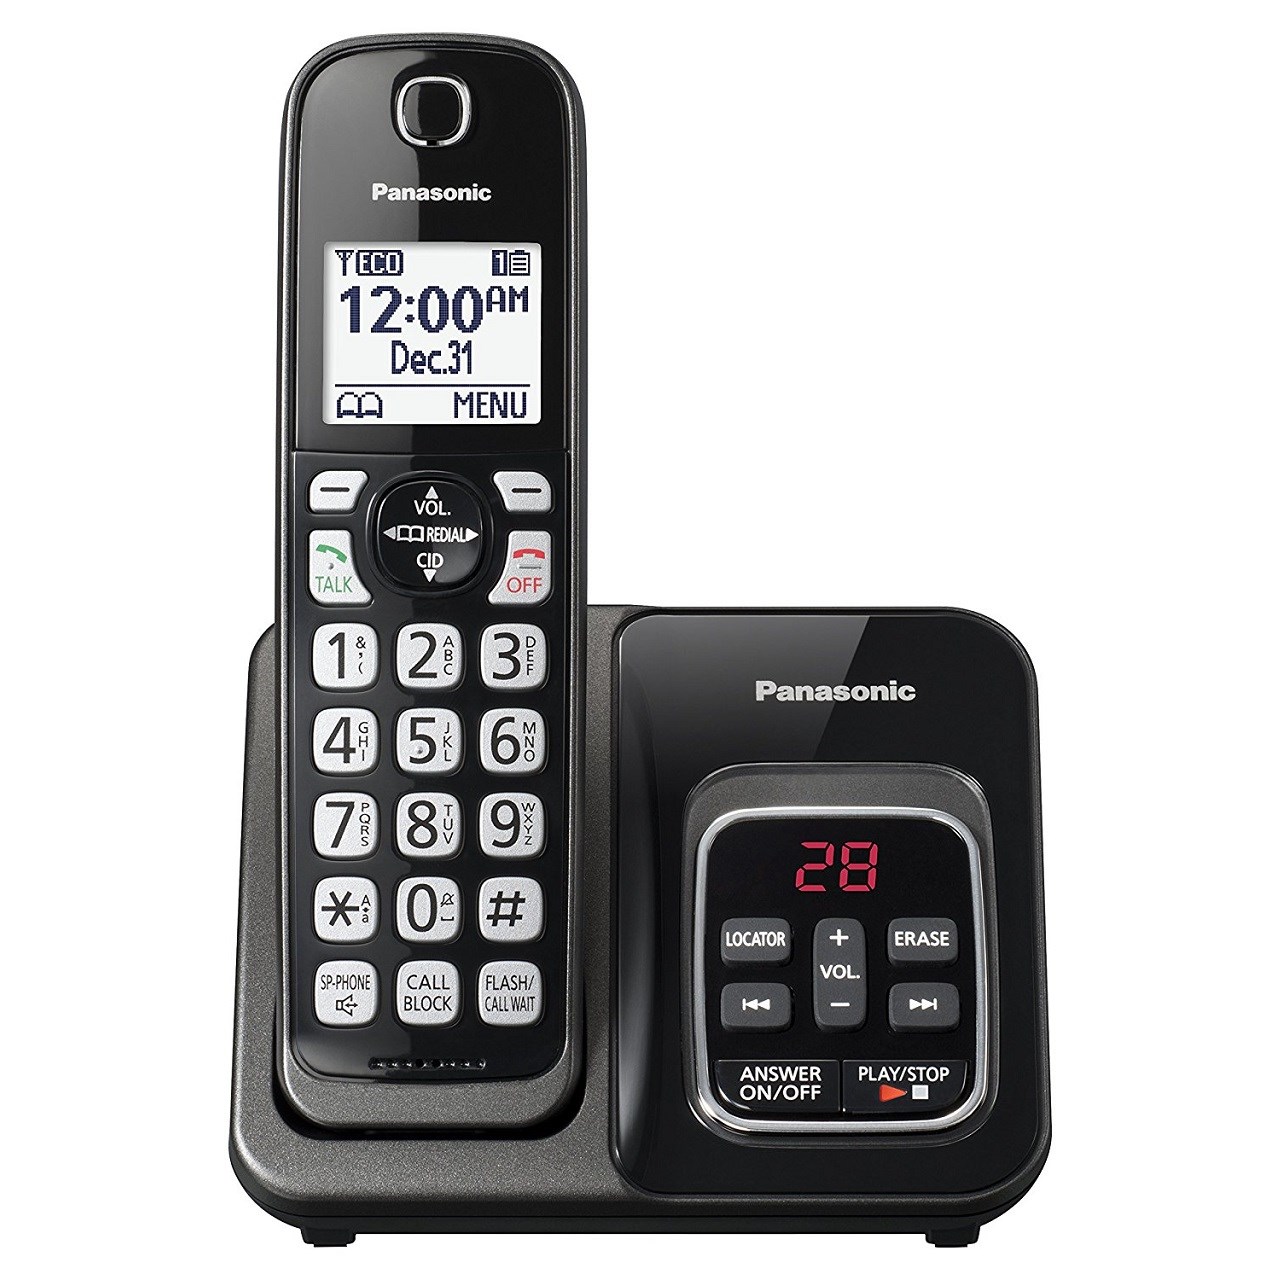 فروش نقدی و اقساطی تلفن بی سیم پاناسونیک مدل KX-TGD530